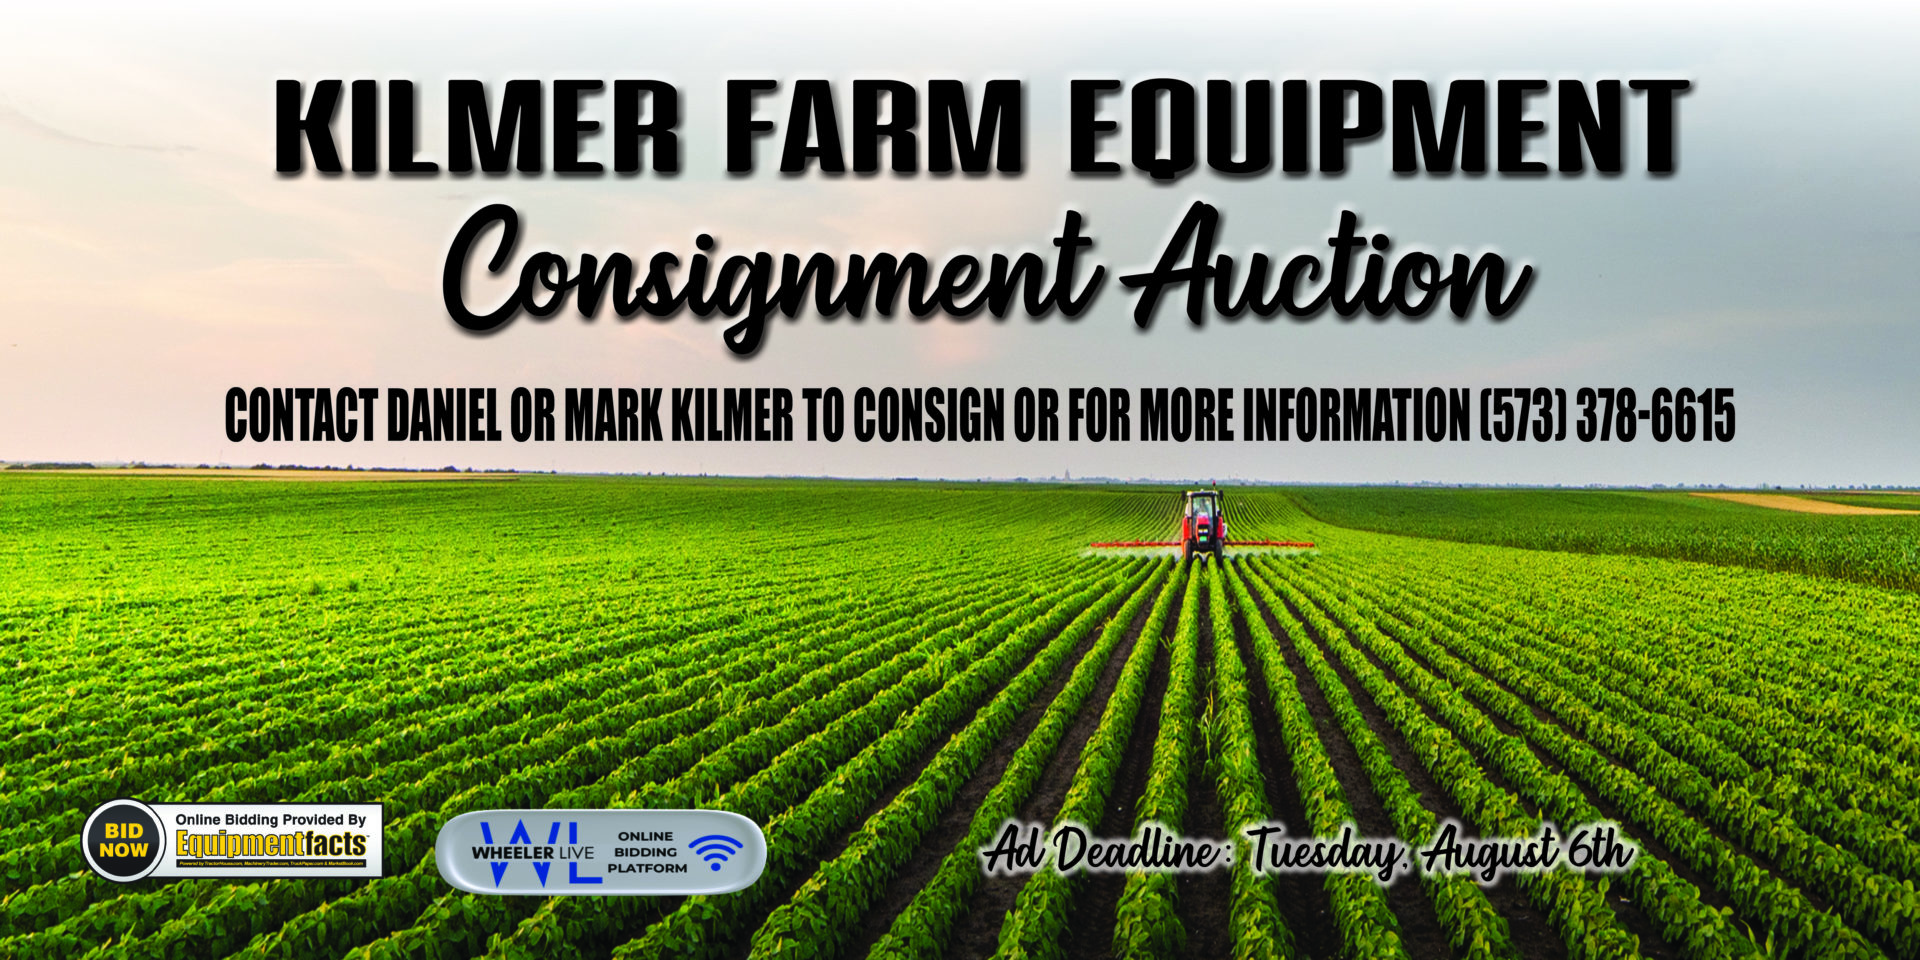 Kilmer Farm Equipment Consignment Auction